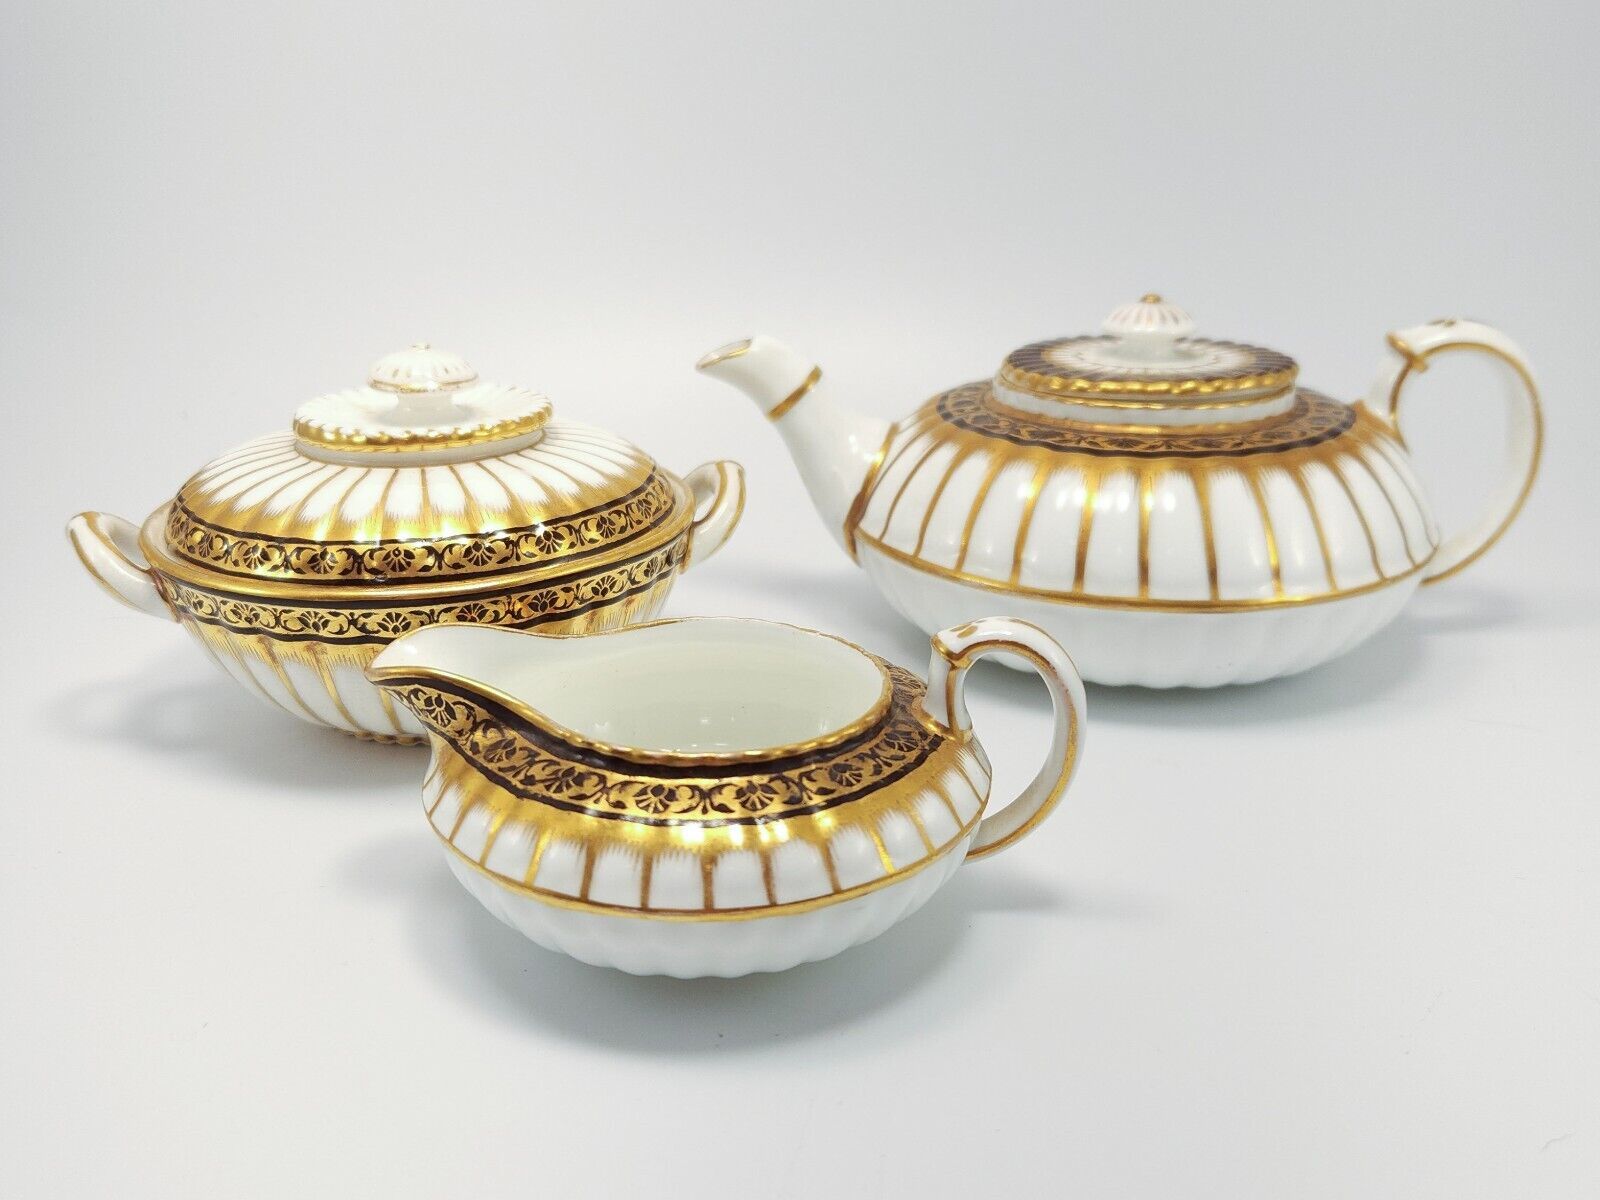 Primary image for Wedgwood Bachelors Tea Set White Gold Mini Teapot Creamer Sugar Bowl Antique